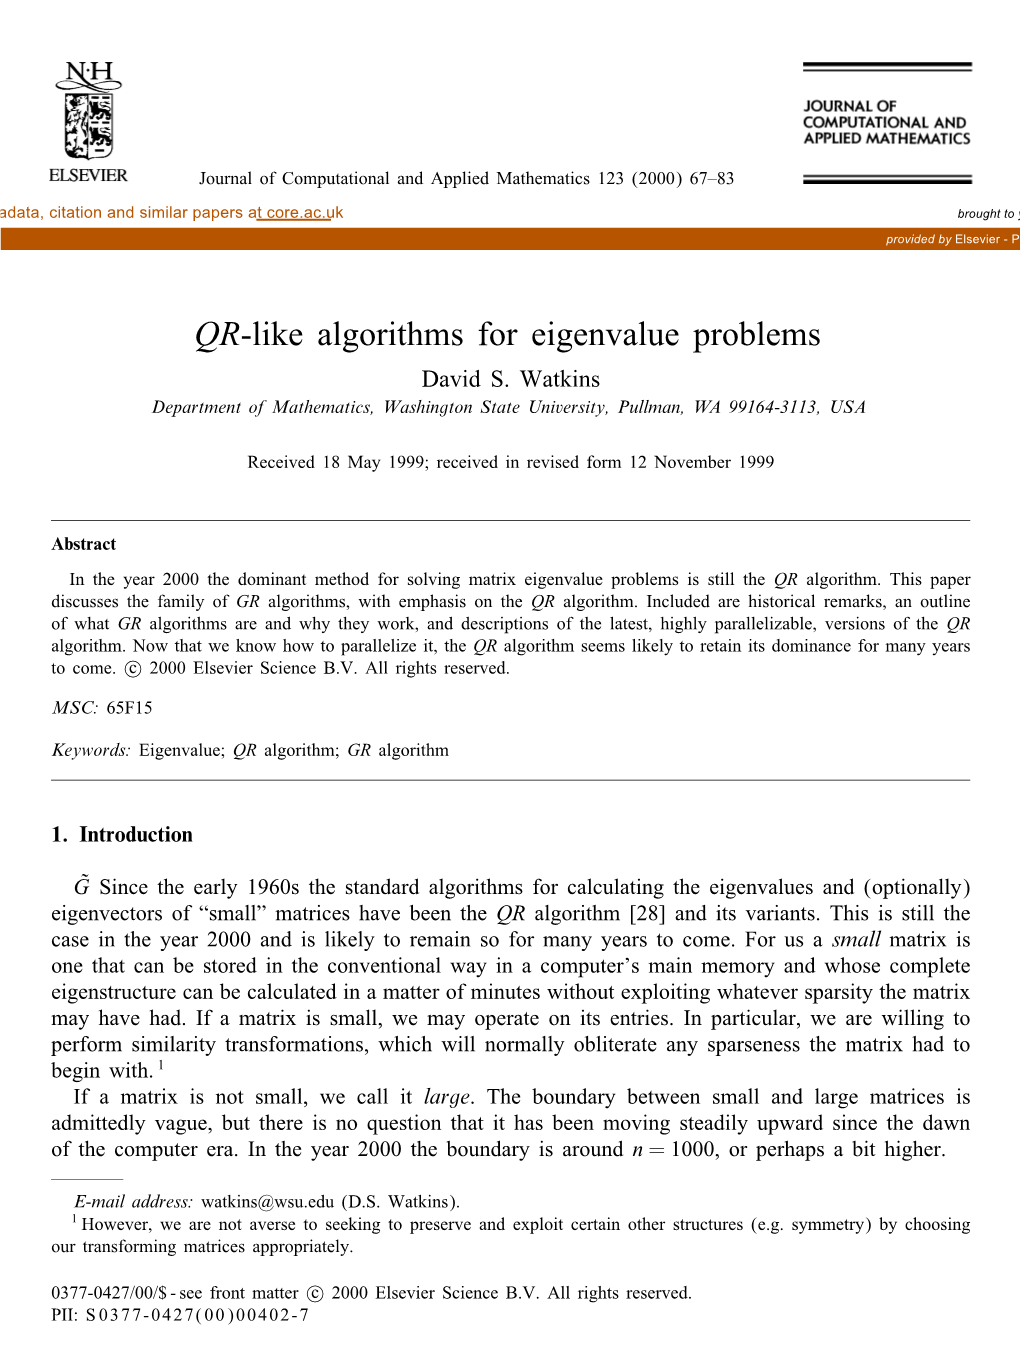 QR-Like Algorithms for Eigenvalue Problems David S